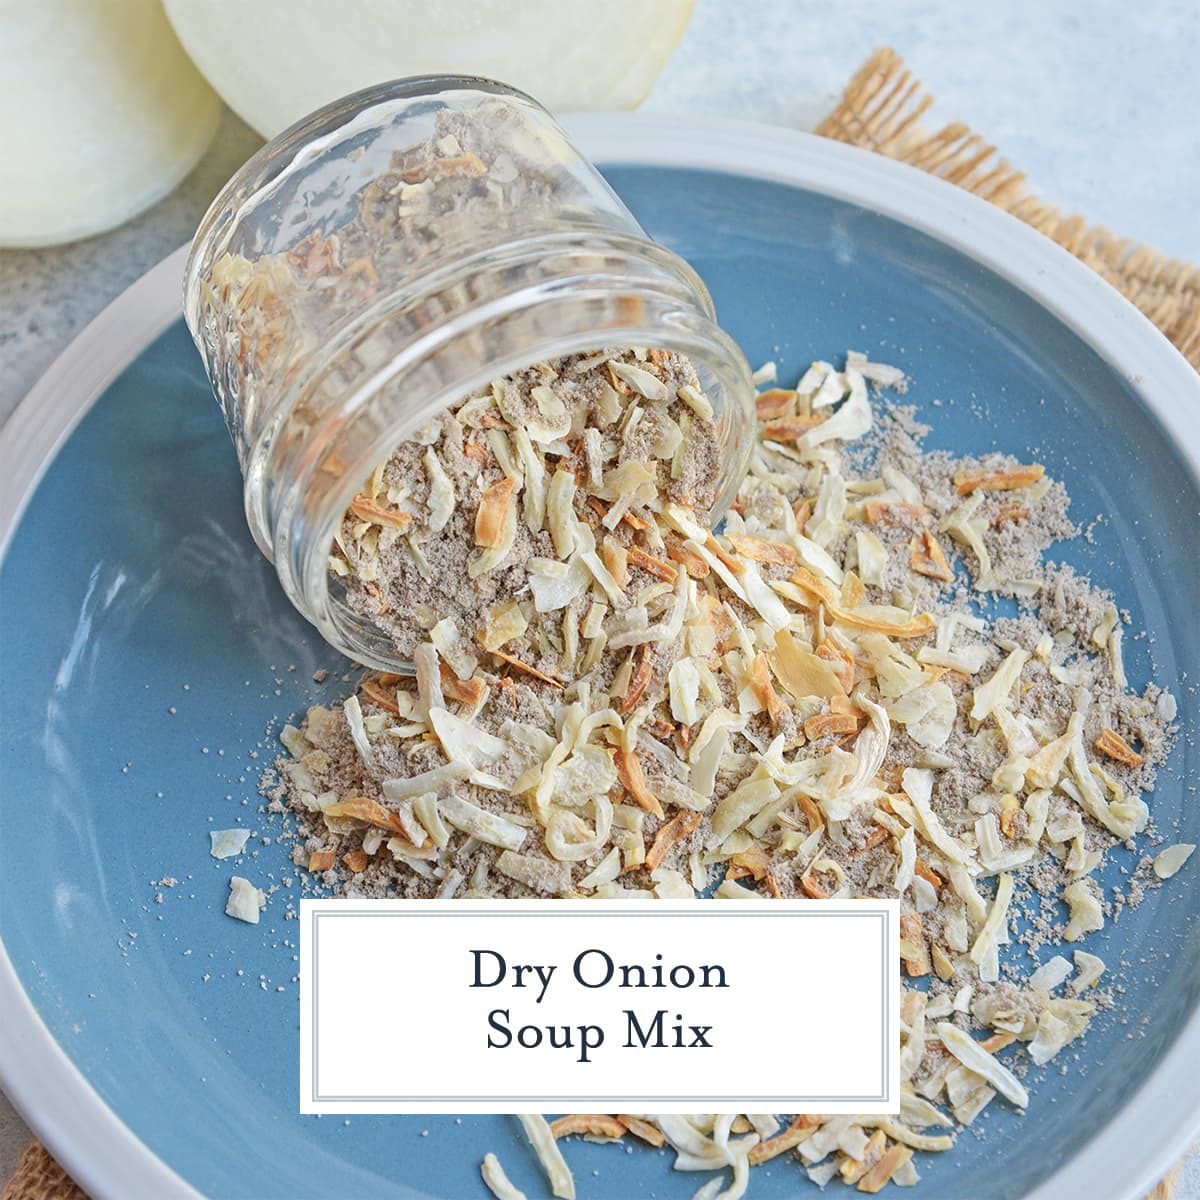 10 Best Lipton Savory Herb with Garlic Soup Mix Recipes